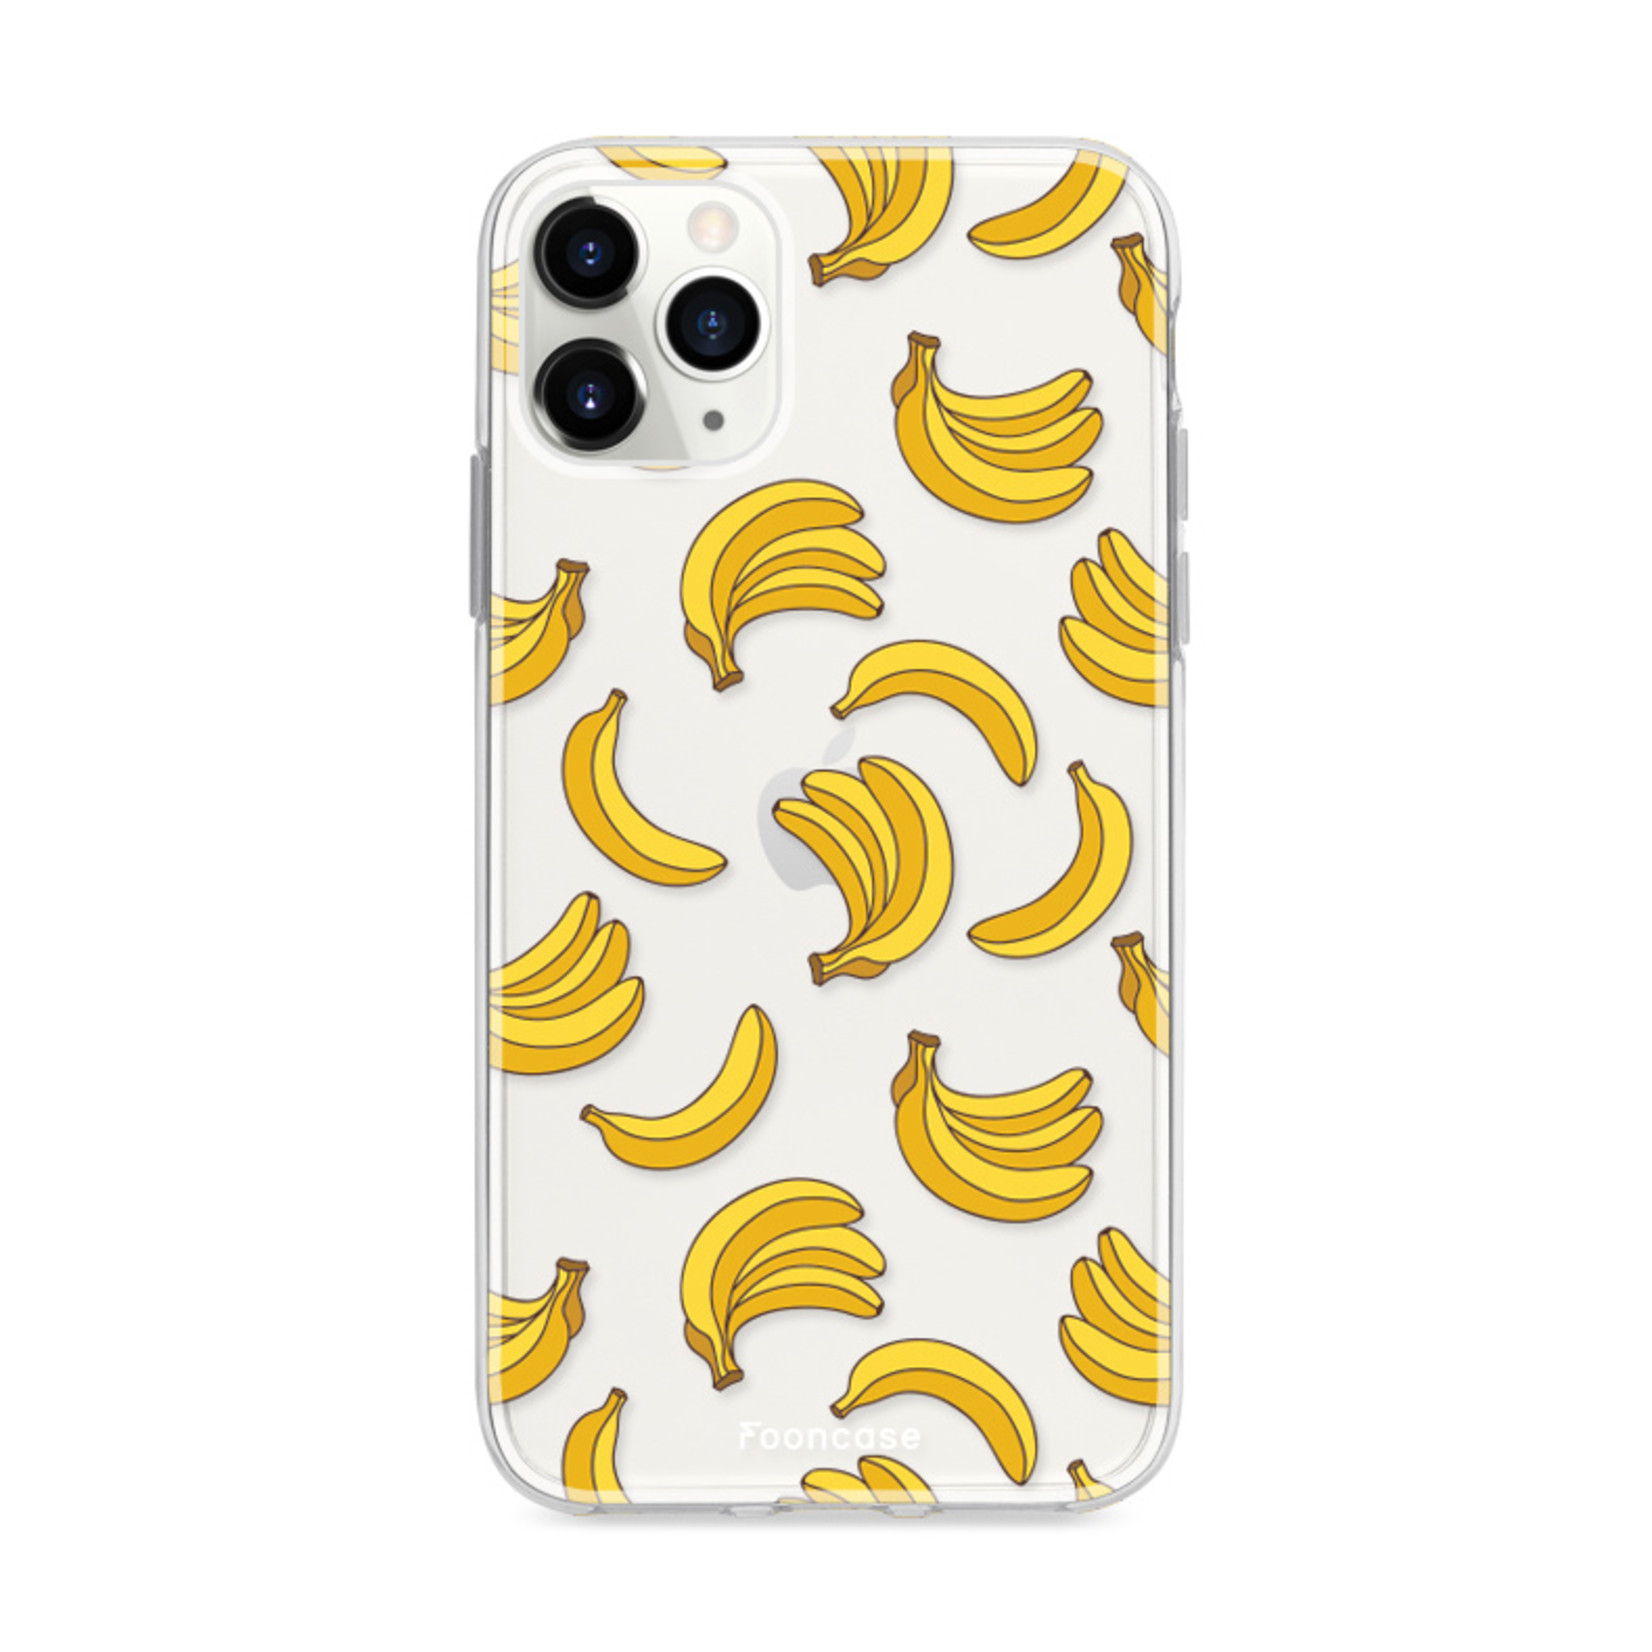 FOONCASE IPhone 11 Pro Max Cover - Bananas